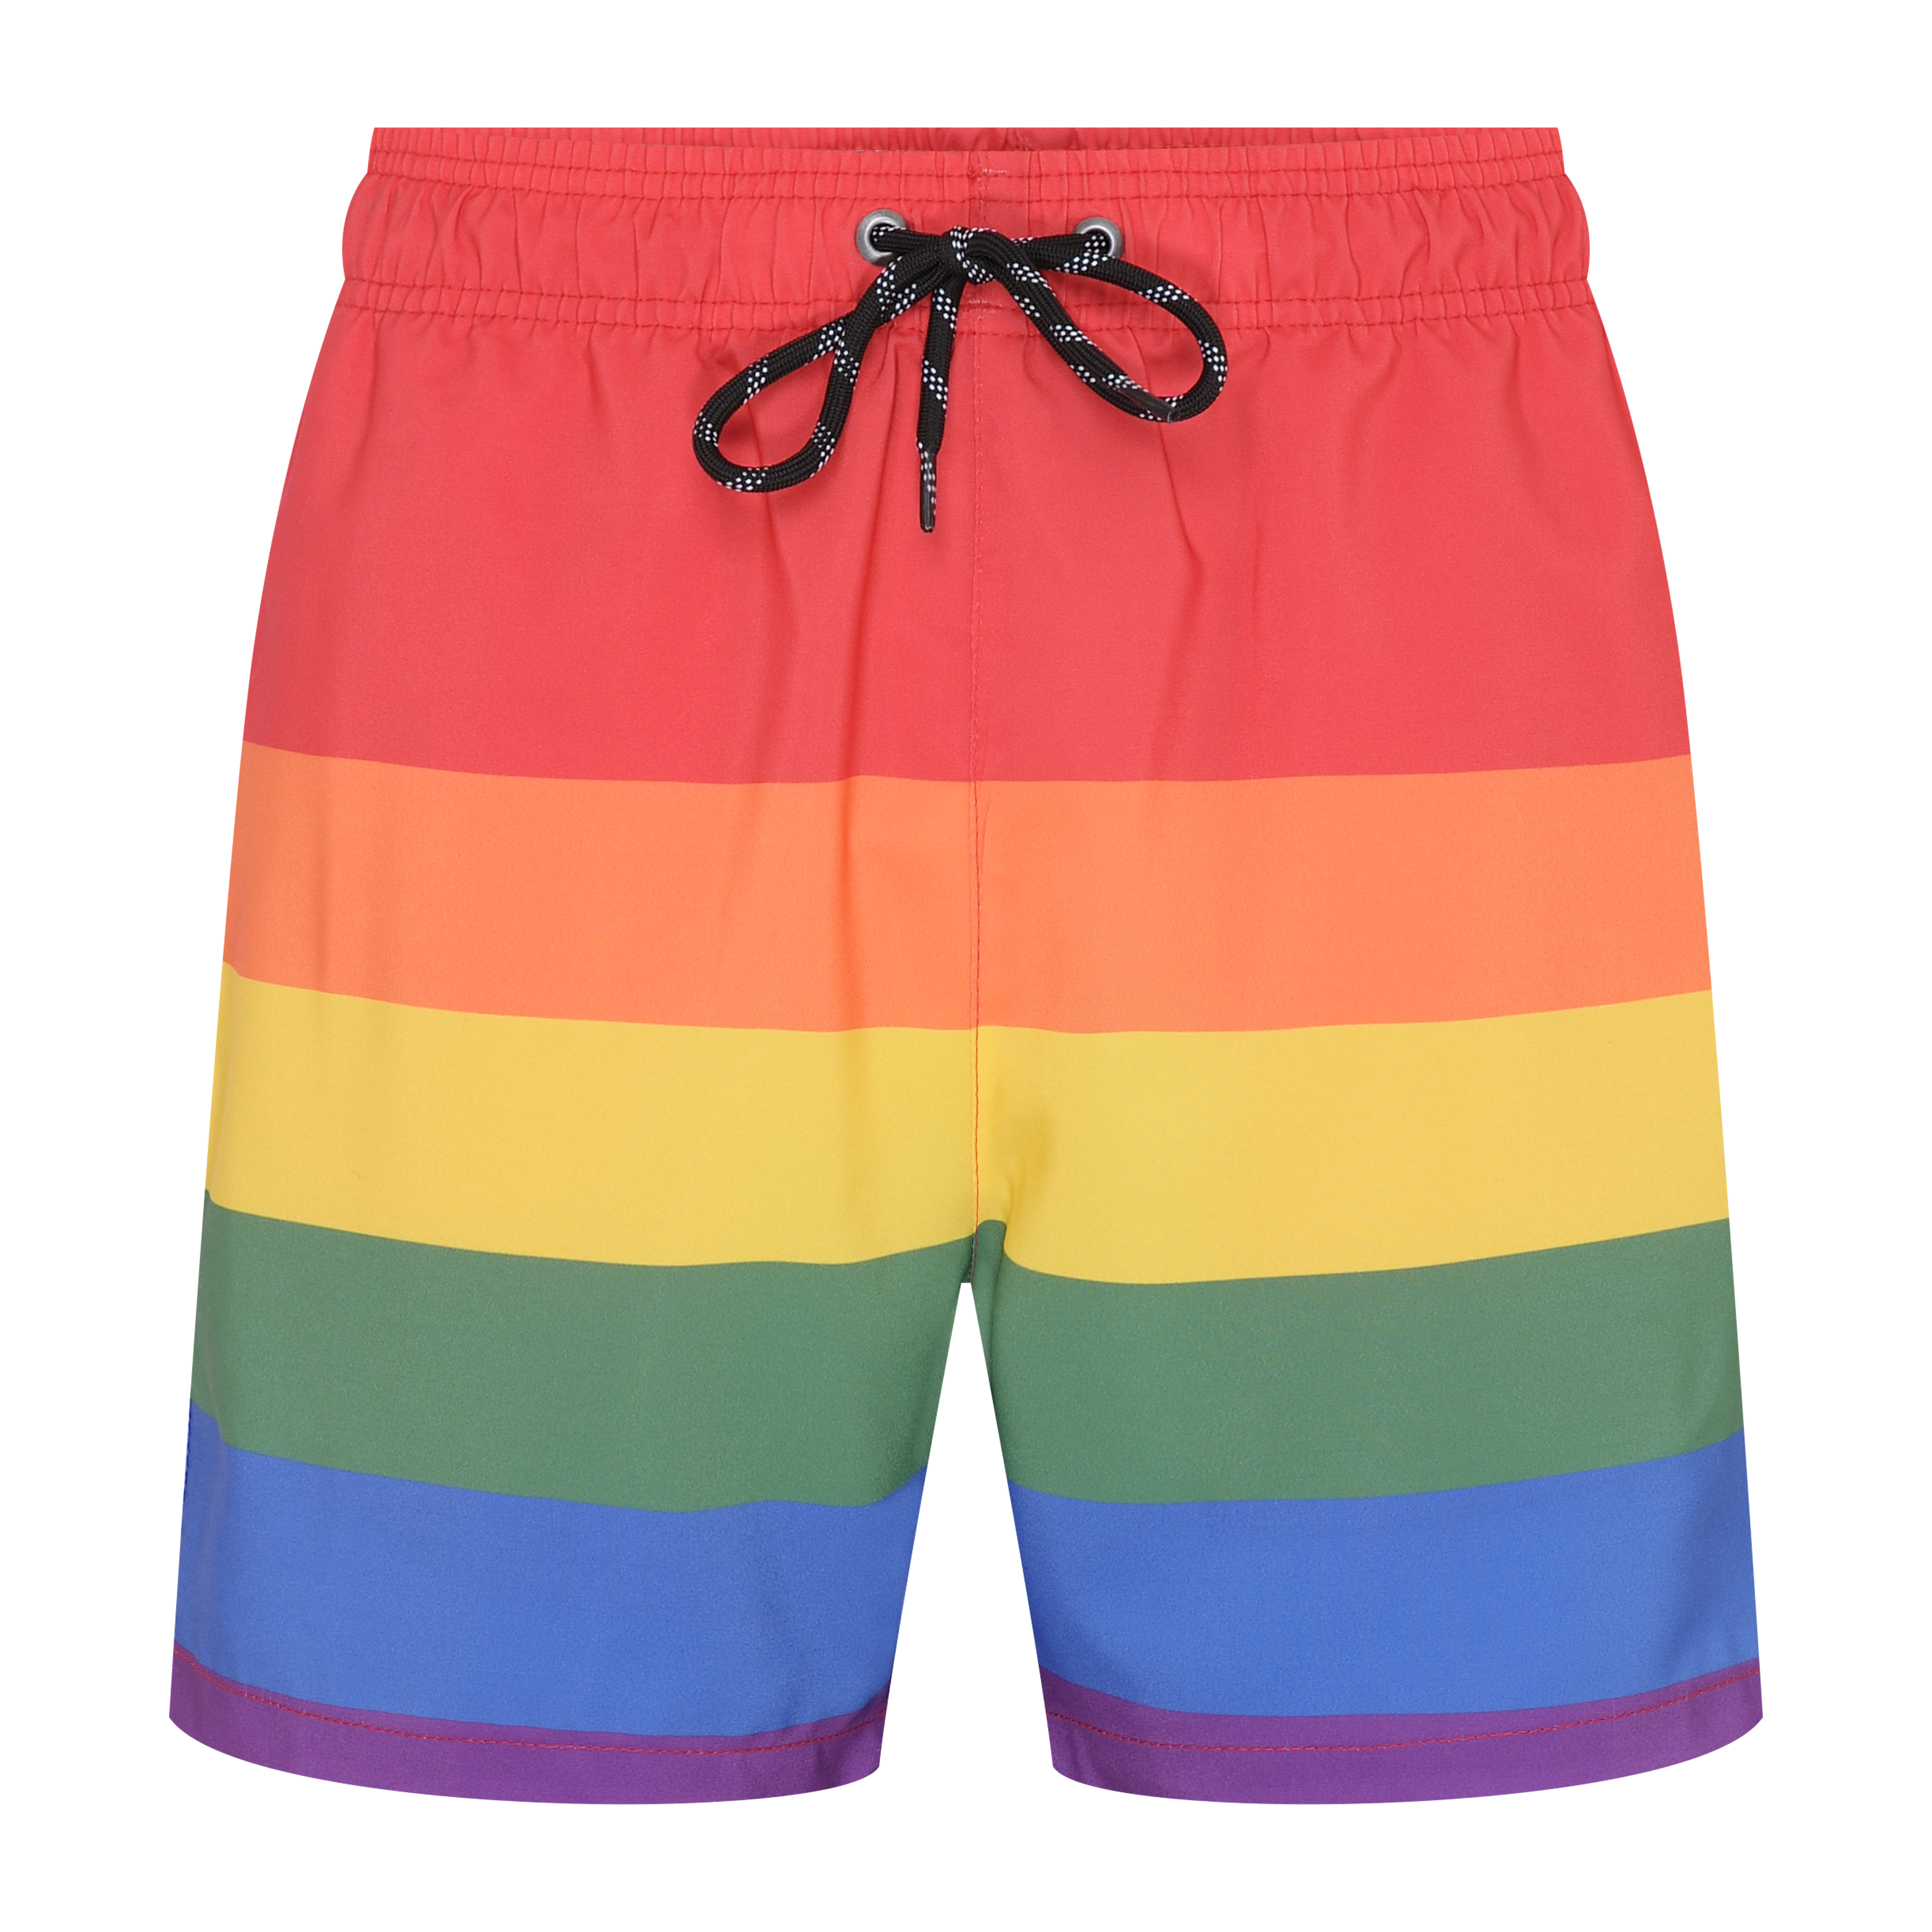 CEA_short masculino pride estampado arco-íris com bolso multicor_R$49.99